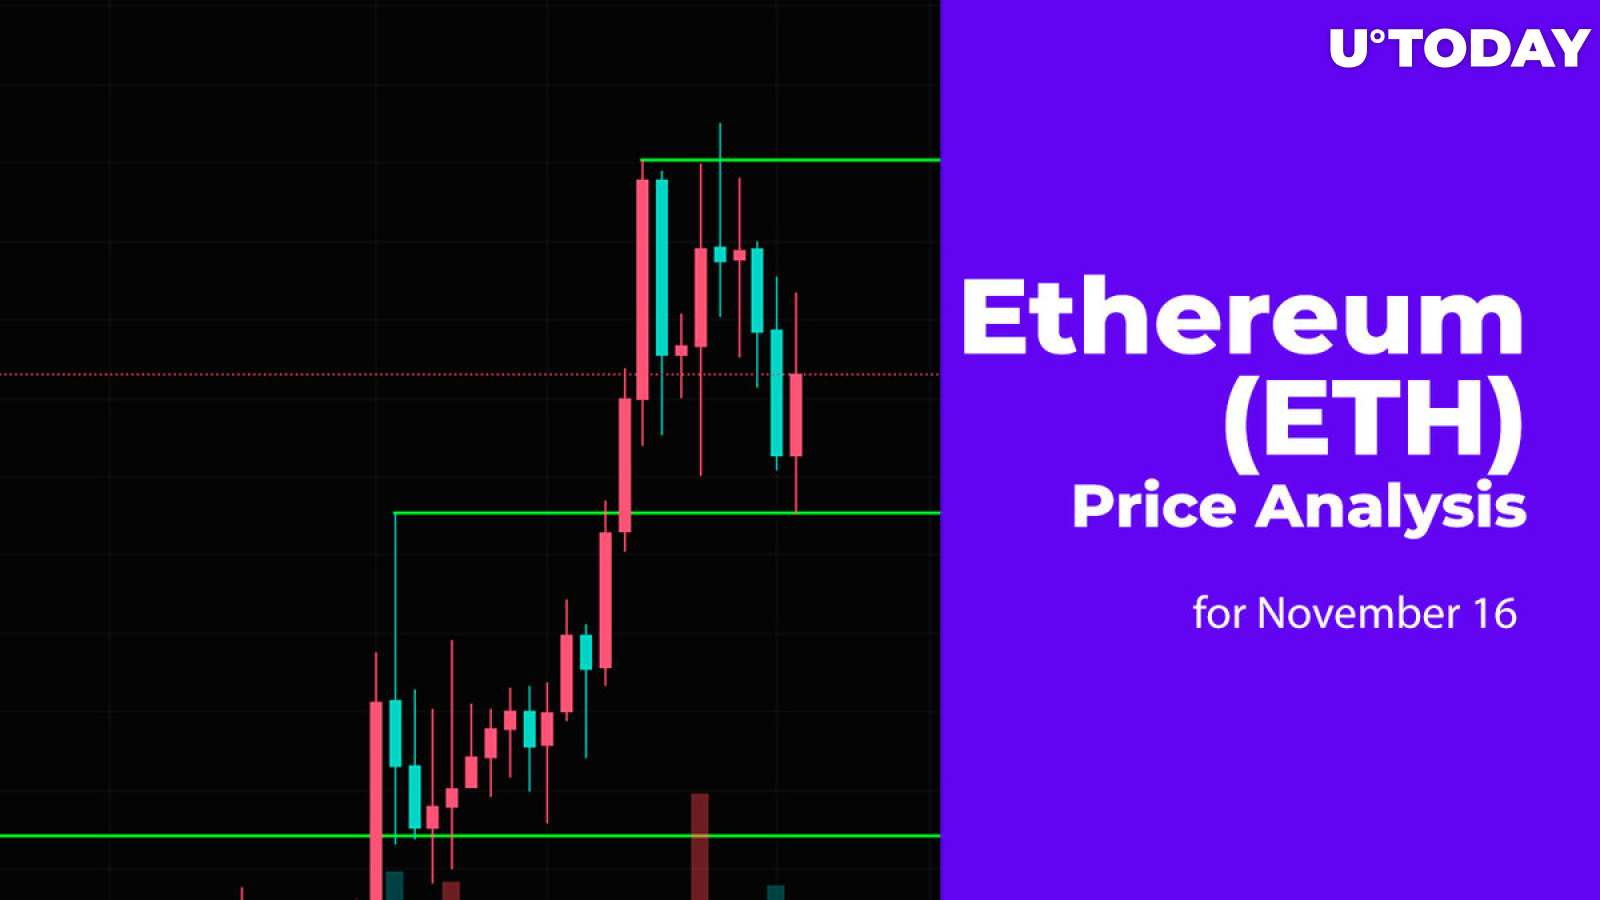 Ethereum (ETH) Price Analysis for November 16